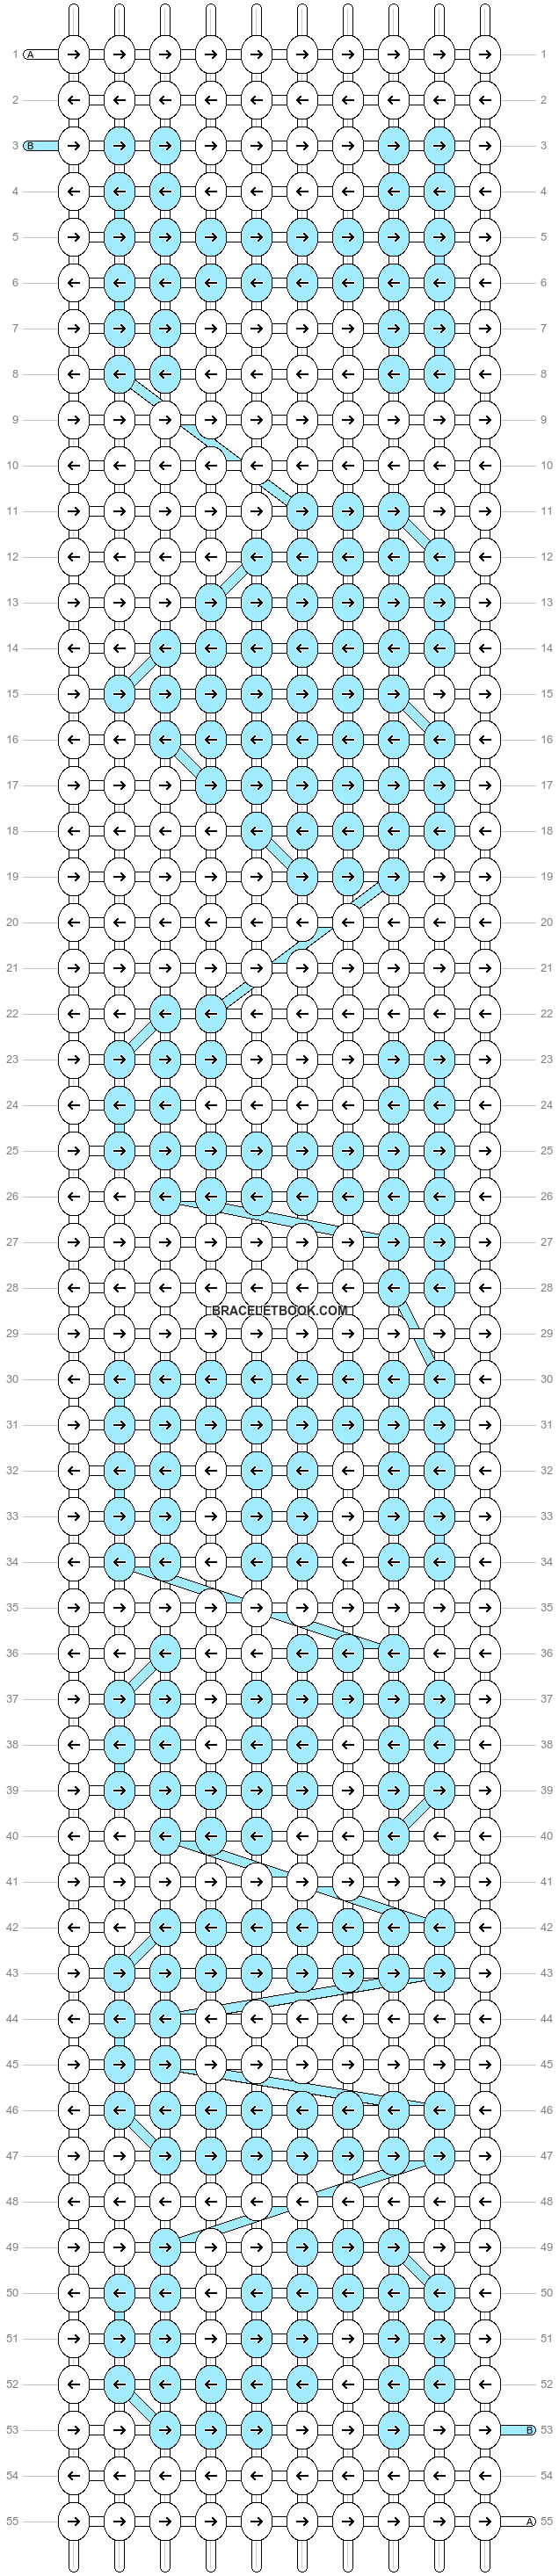 Alpha pattern #19594 variation #229696 pattern